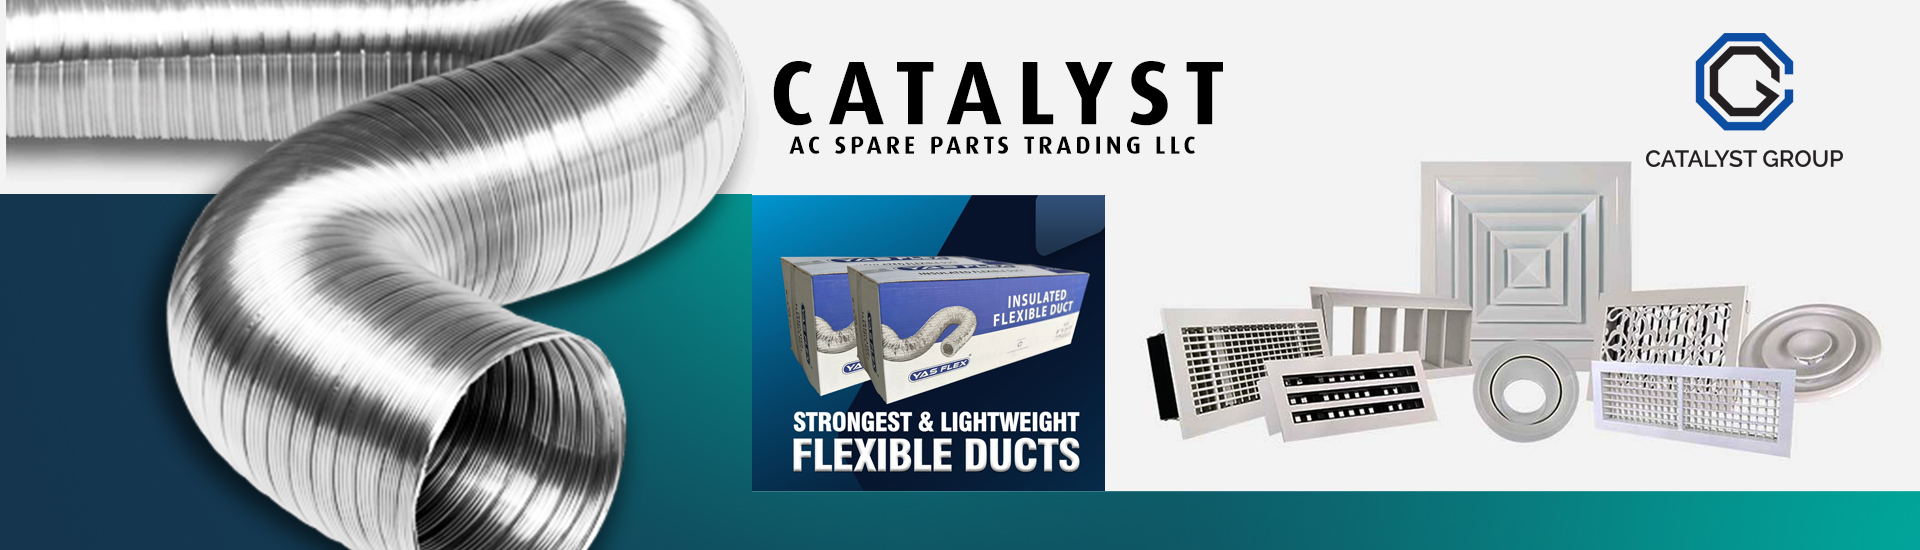 CATALYST AC SPARE PARTS TRADING LLC